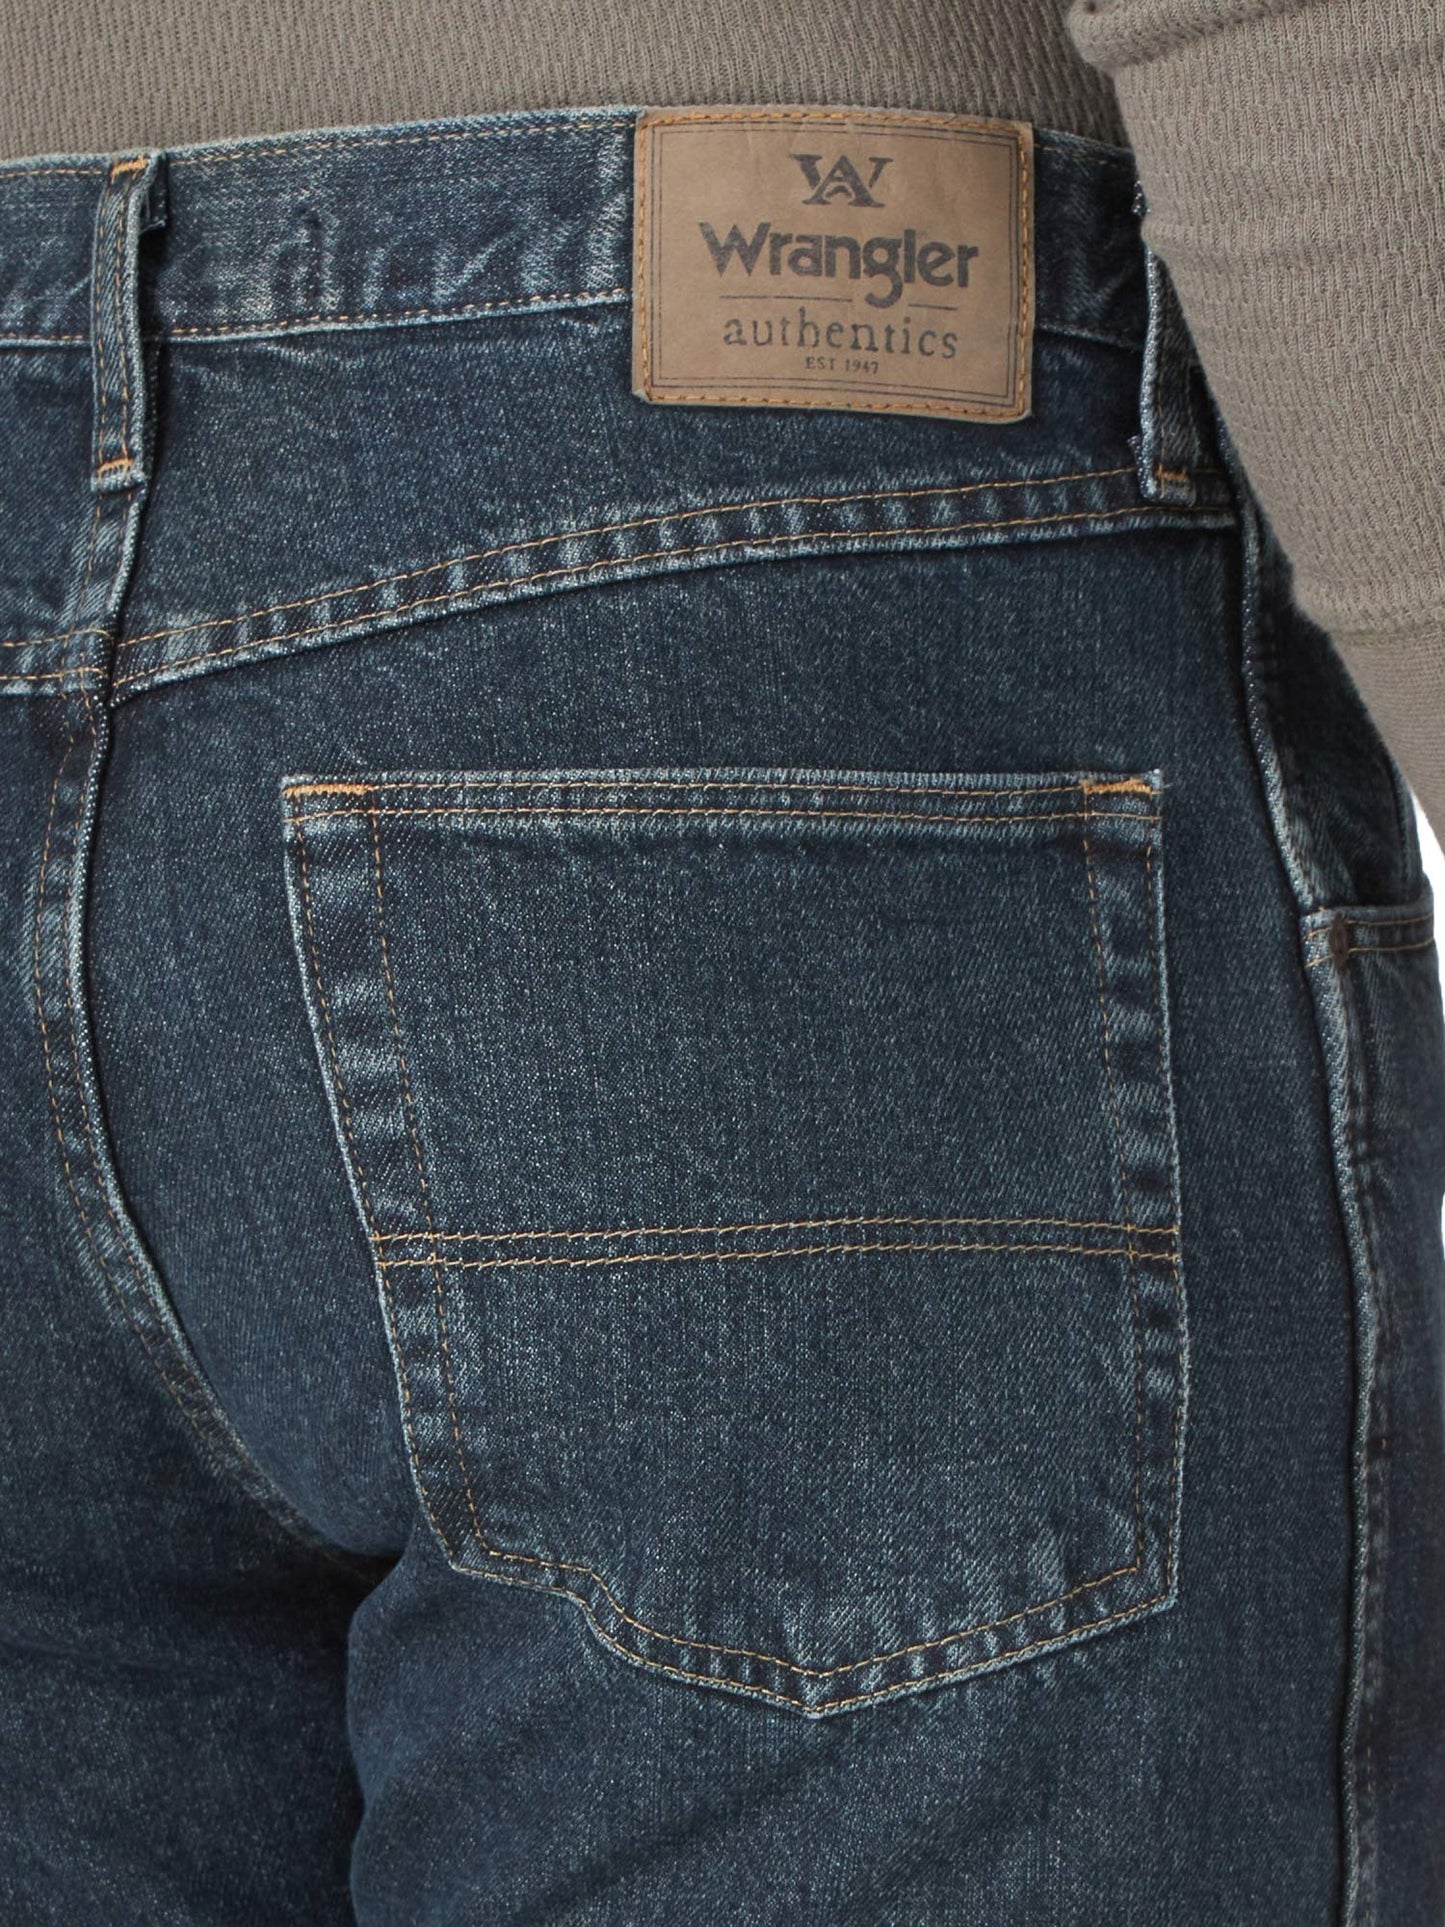 Wrangler Authentics Men's Classic 5-Pocket Regular Fit Cotton Jean, Storm, 31W x 34L